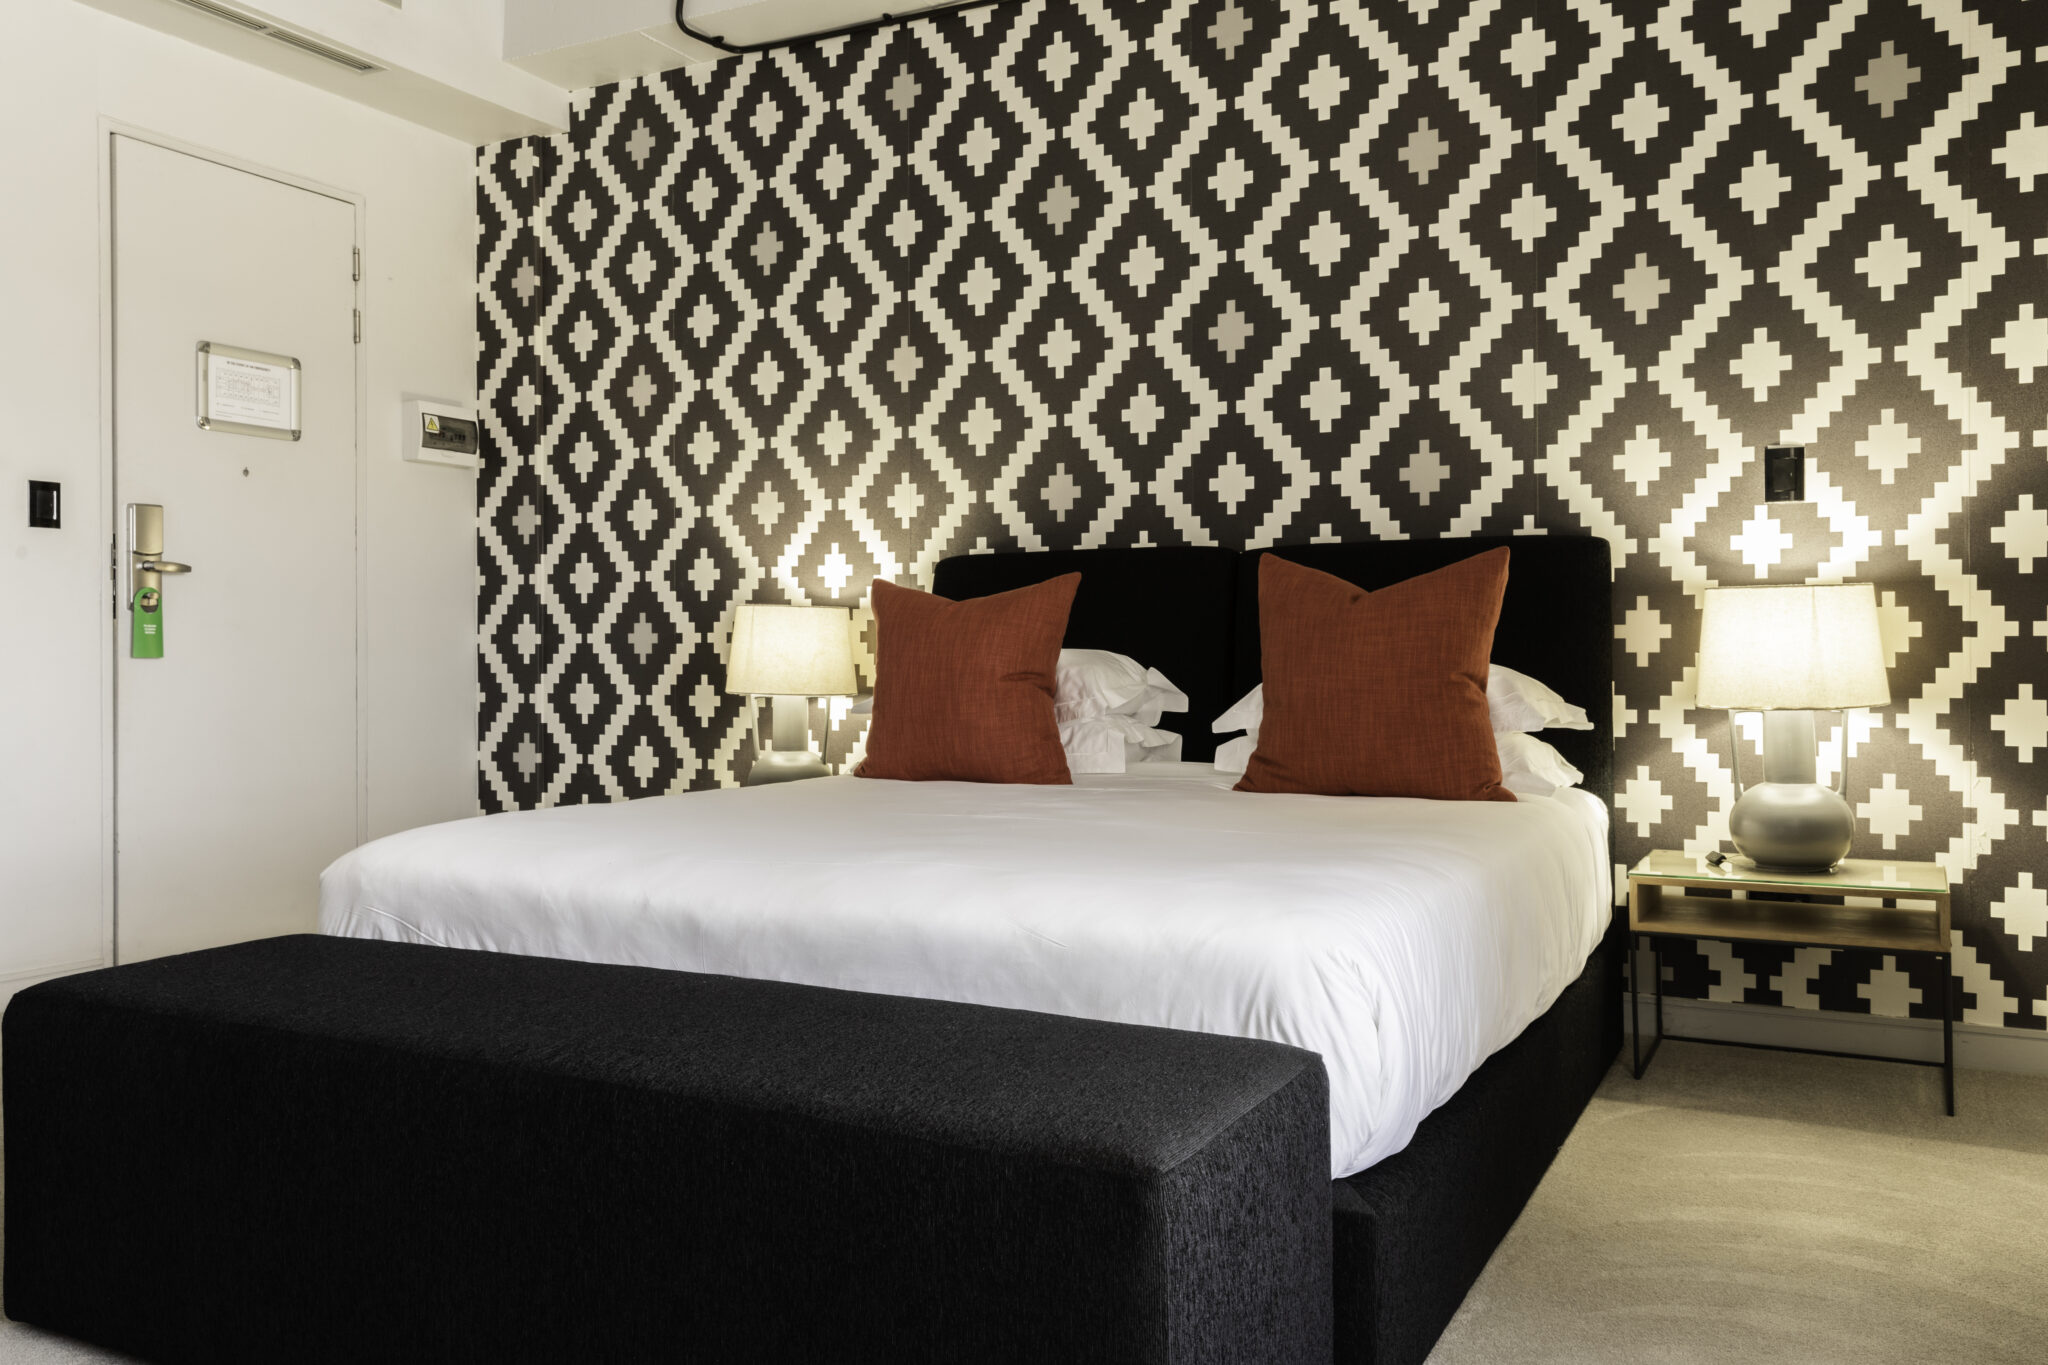 Hallmark House & BON Hotels to Enhance Johannesburg’s Art Hotel Experience